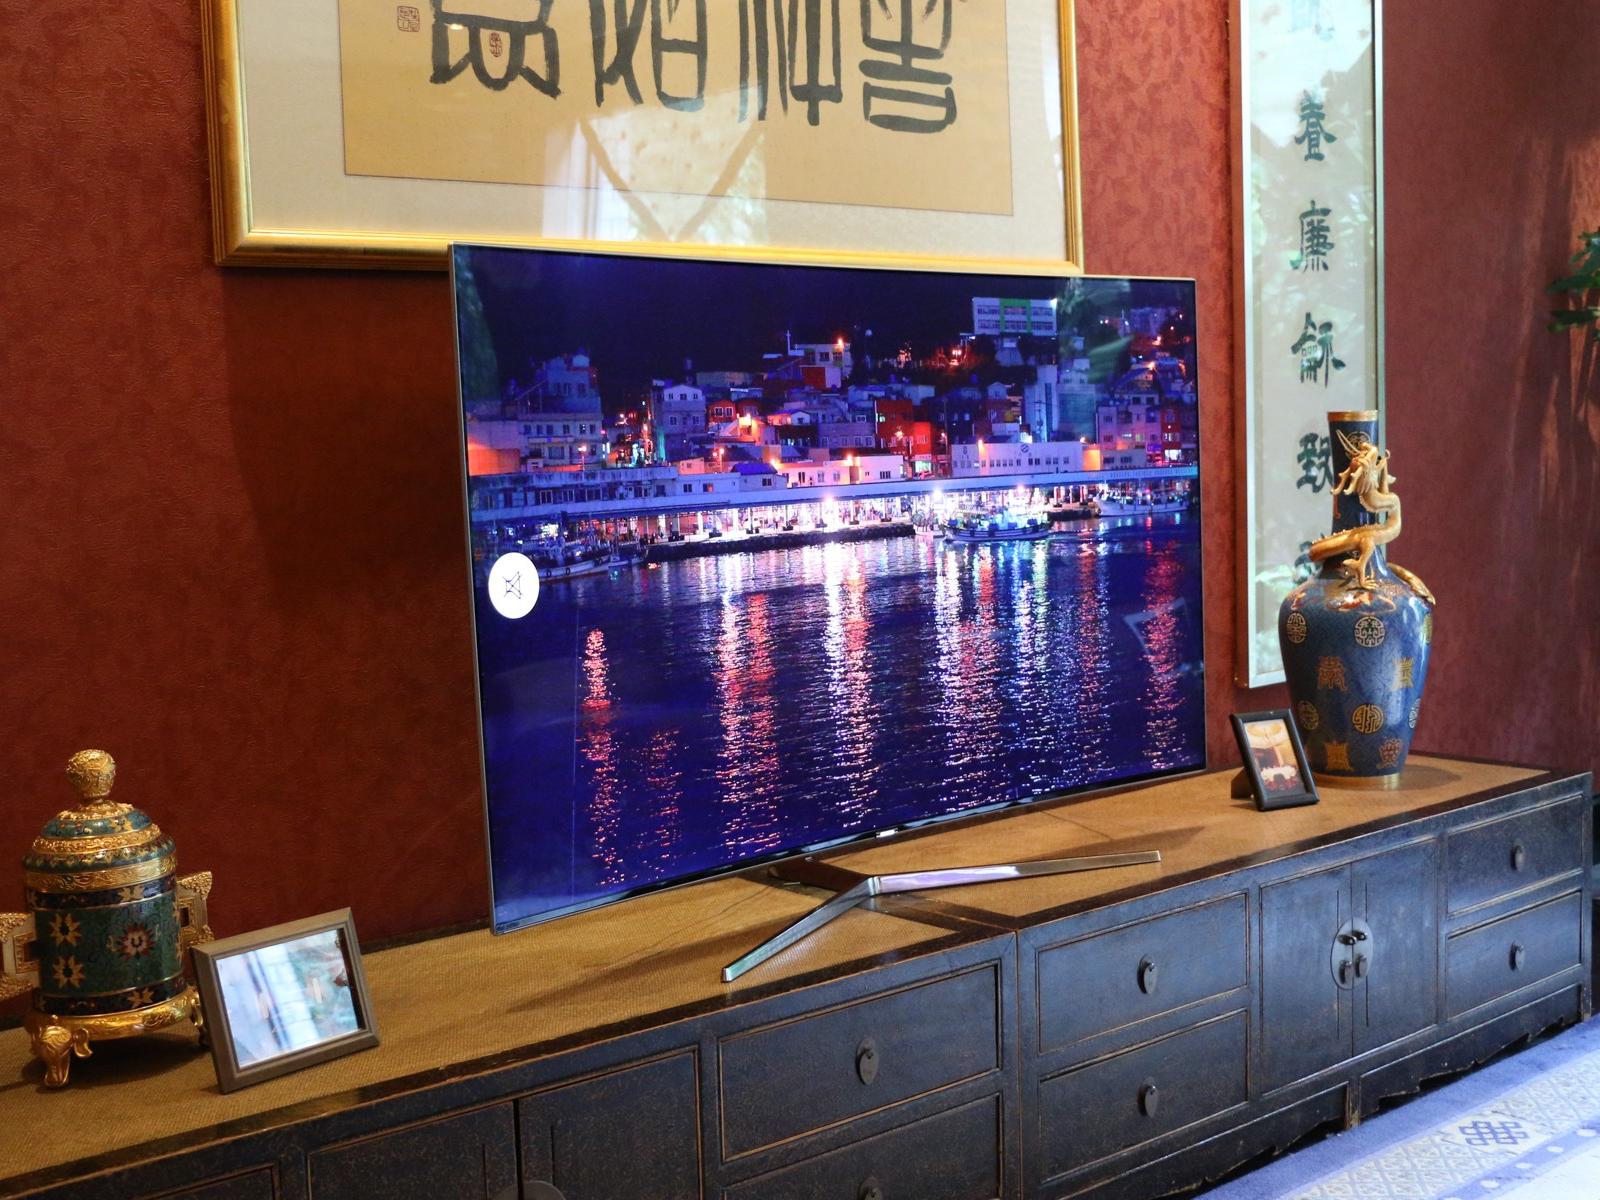 Samsung KS9800 4K Ultra HD TV First Look | Digital Trends